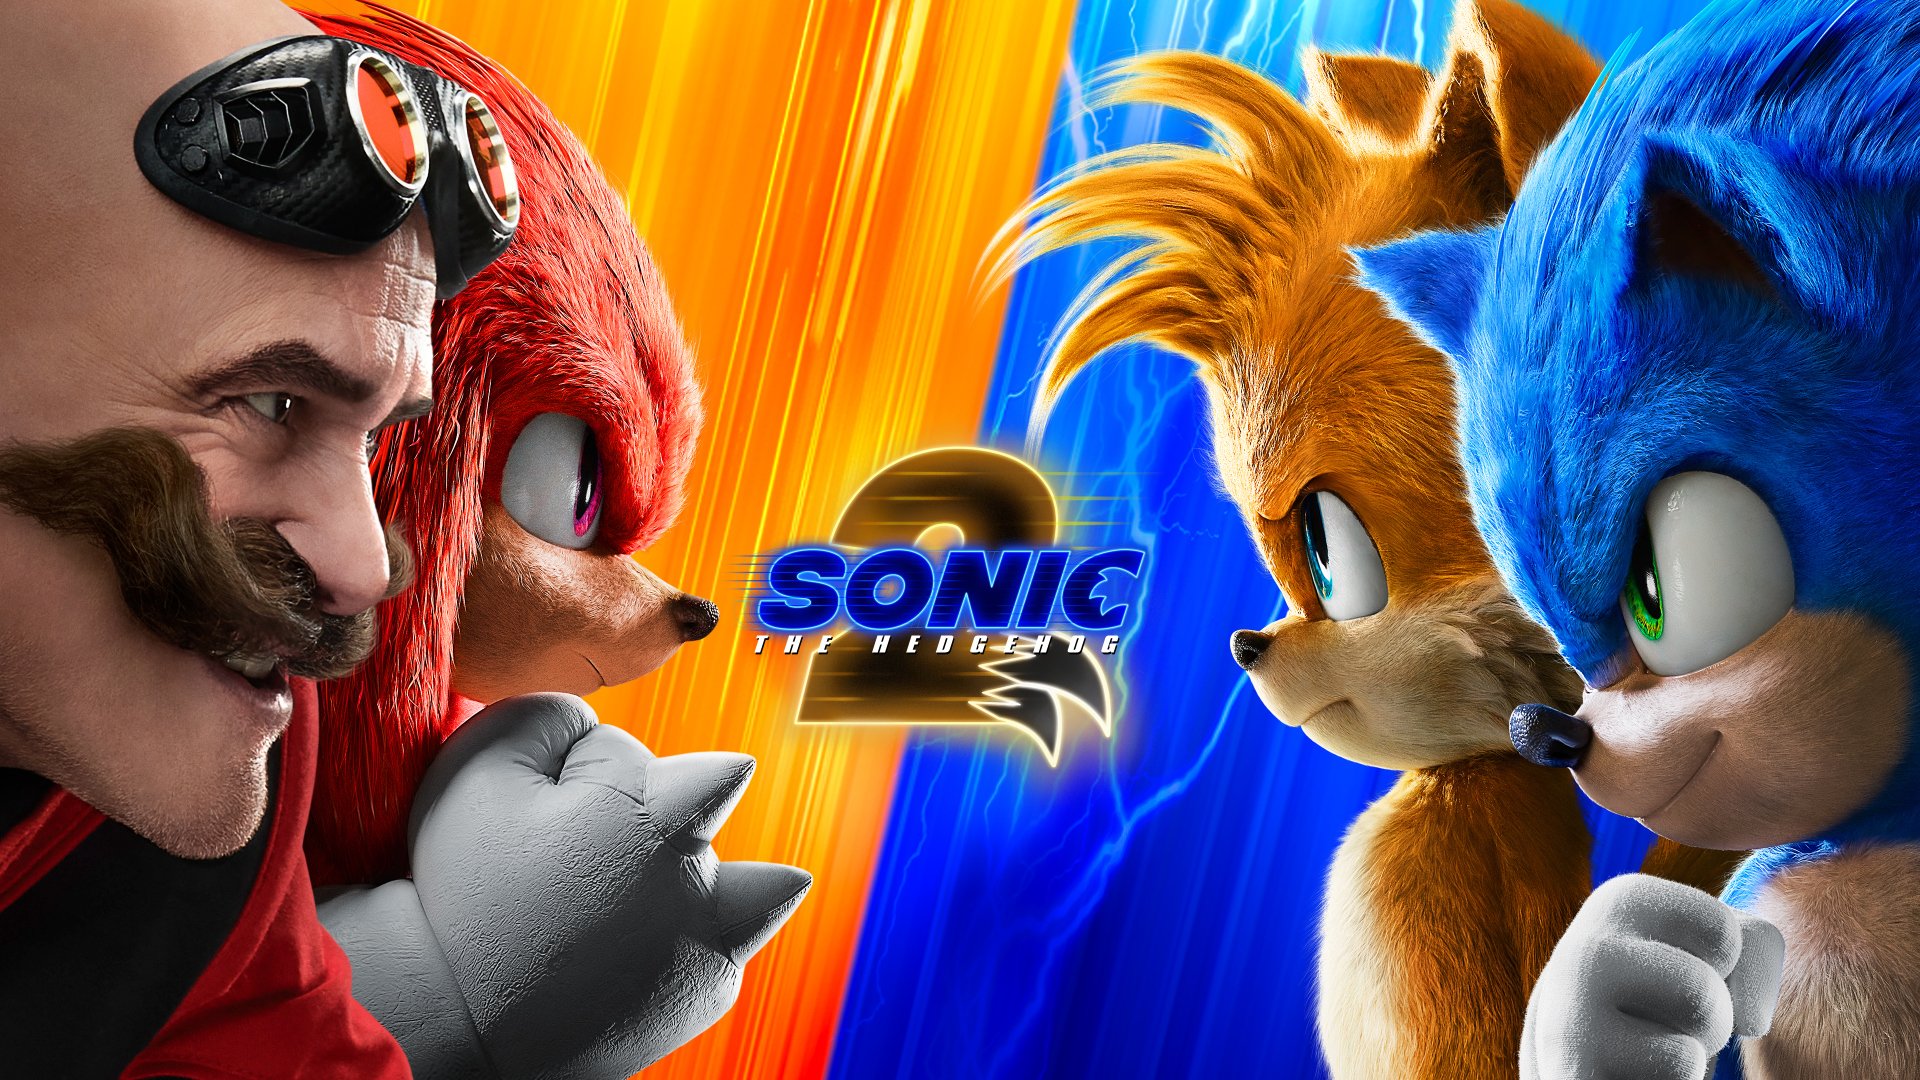 Stream Sonic the Hedgehog 2  Listen to Sonic the Hedgehog 2 Full